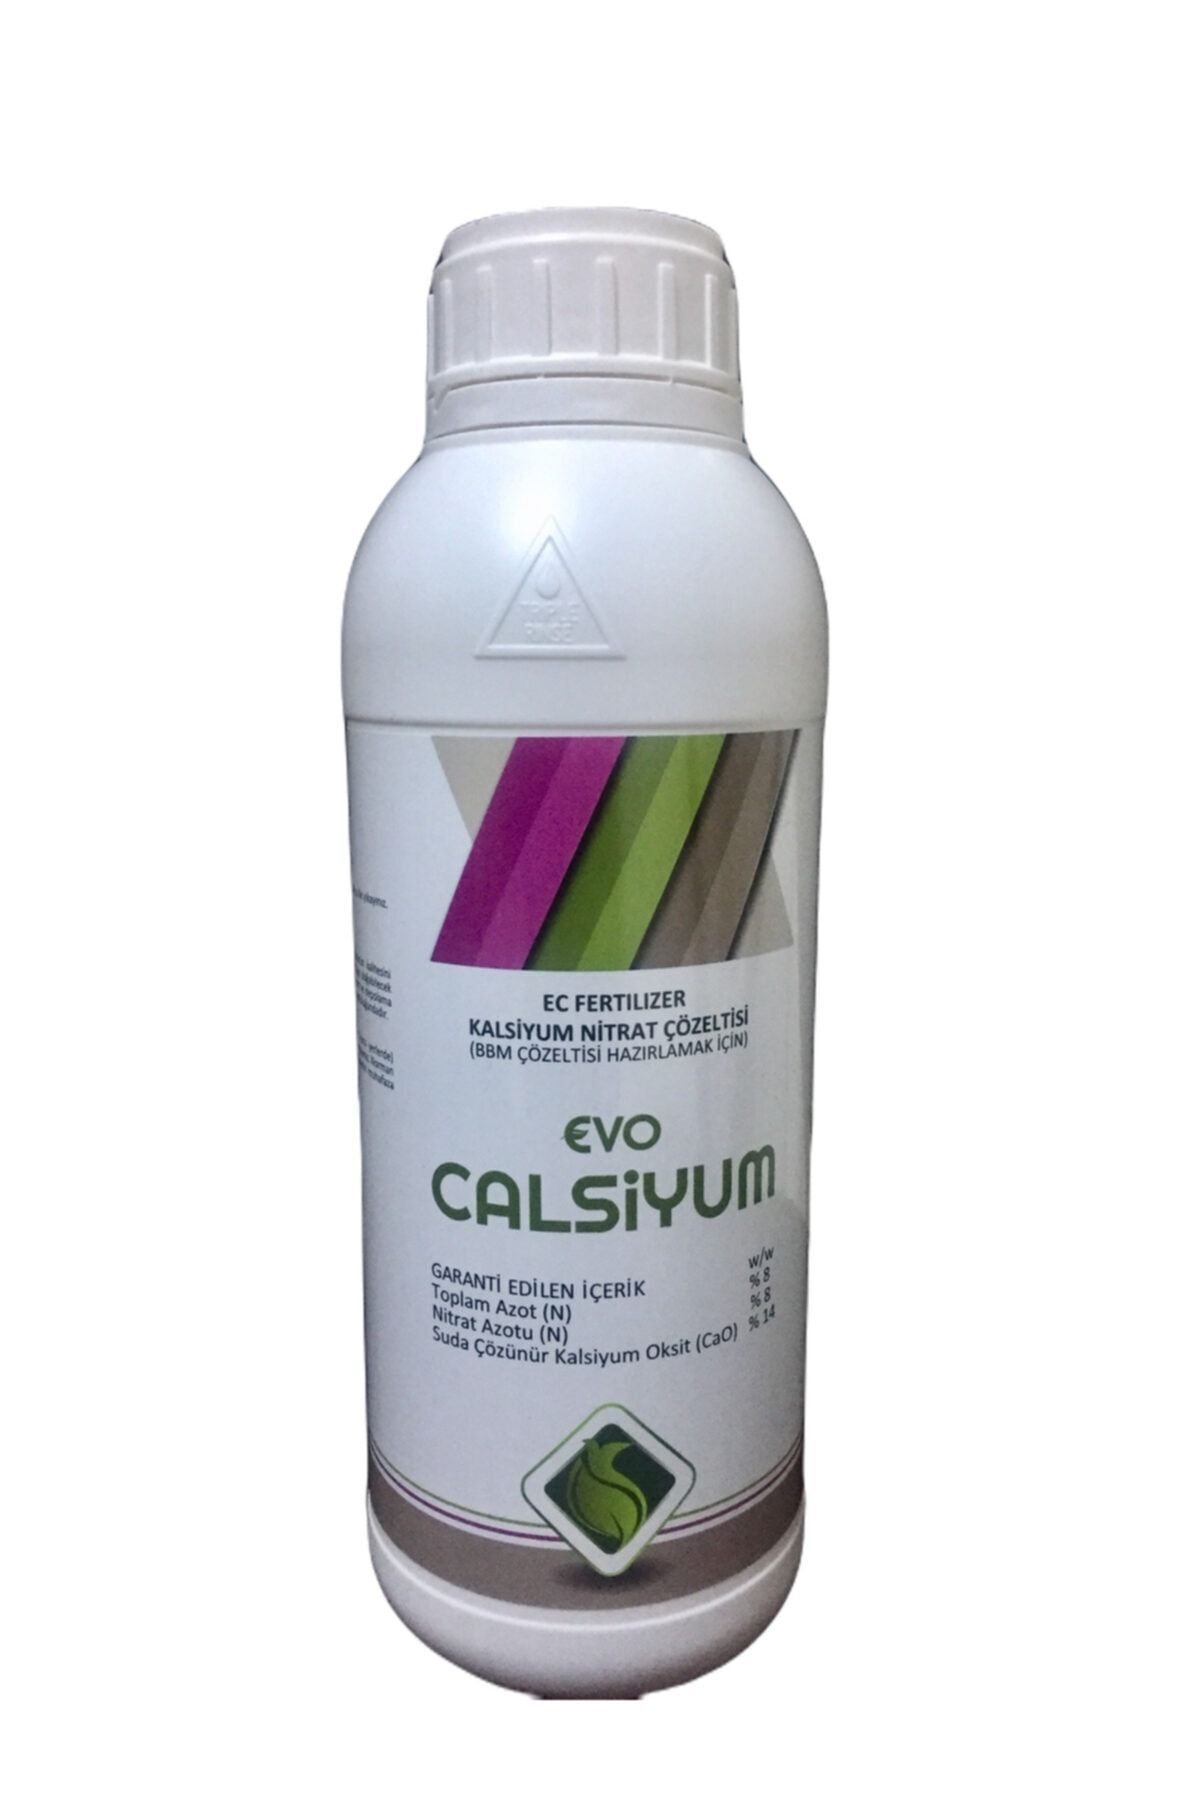 Evo Calsiyum Kalsiyum Nitrat Gübresi 1 Litre